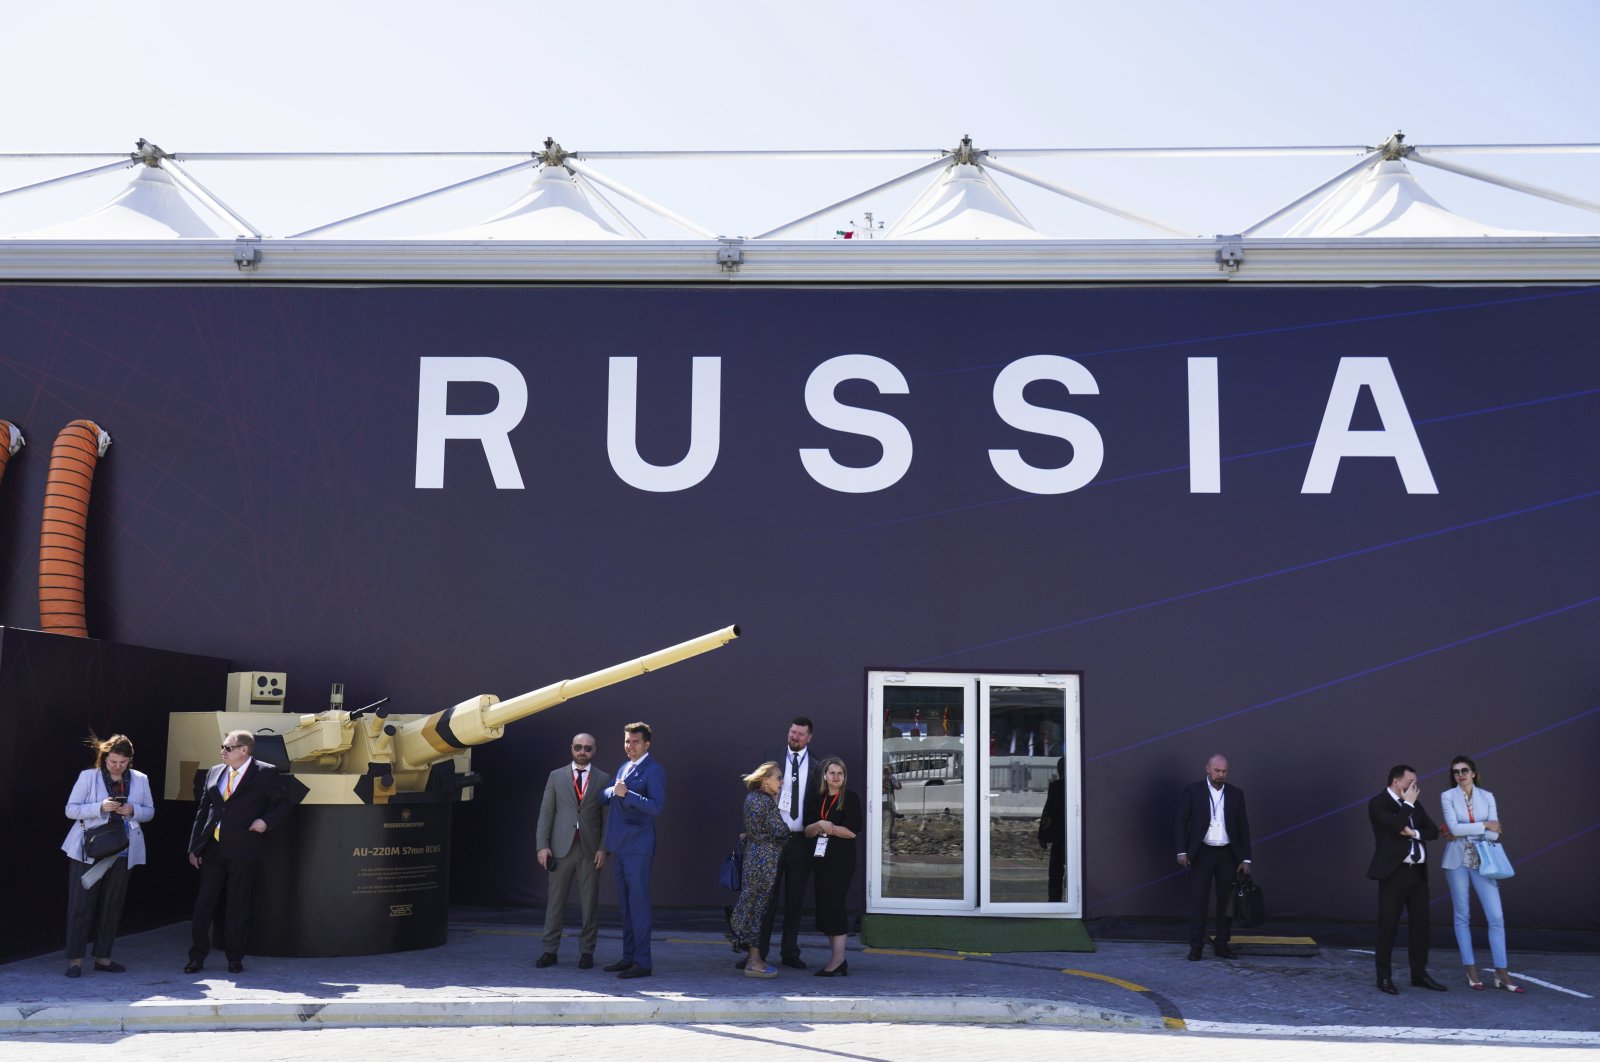 Senjata Rusia dijual di pameran senjata Abu Dhabi di tengah perang Ukraina